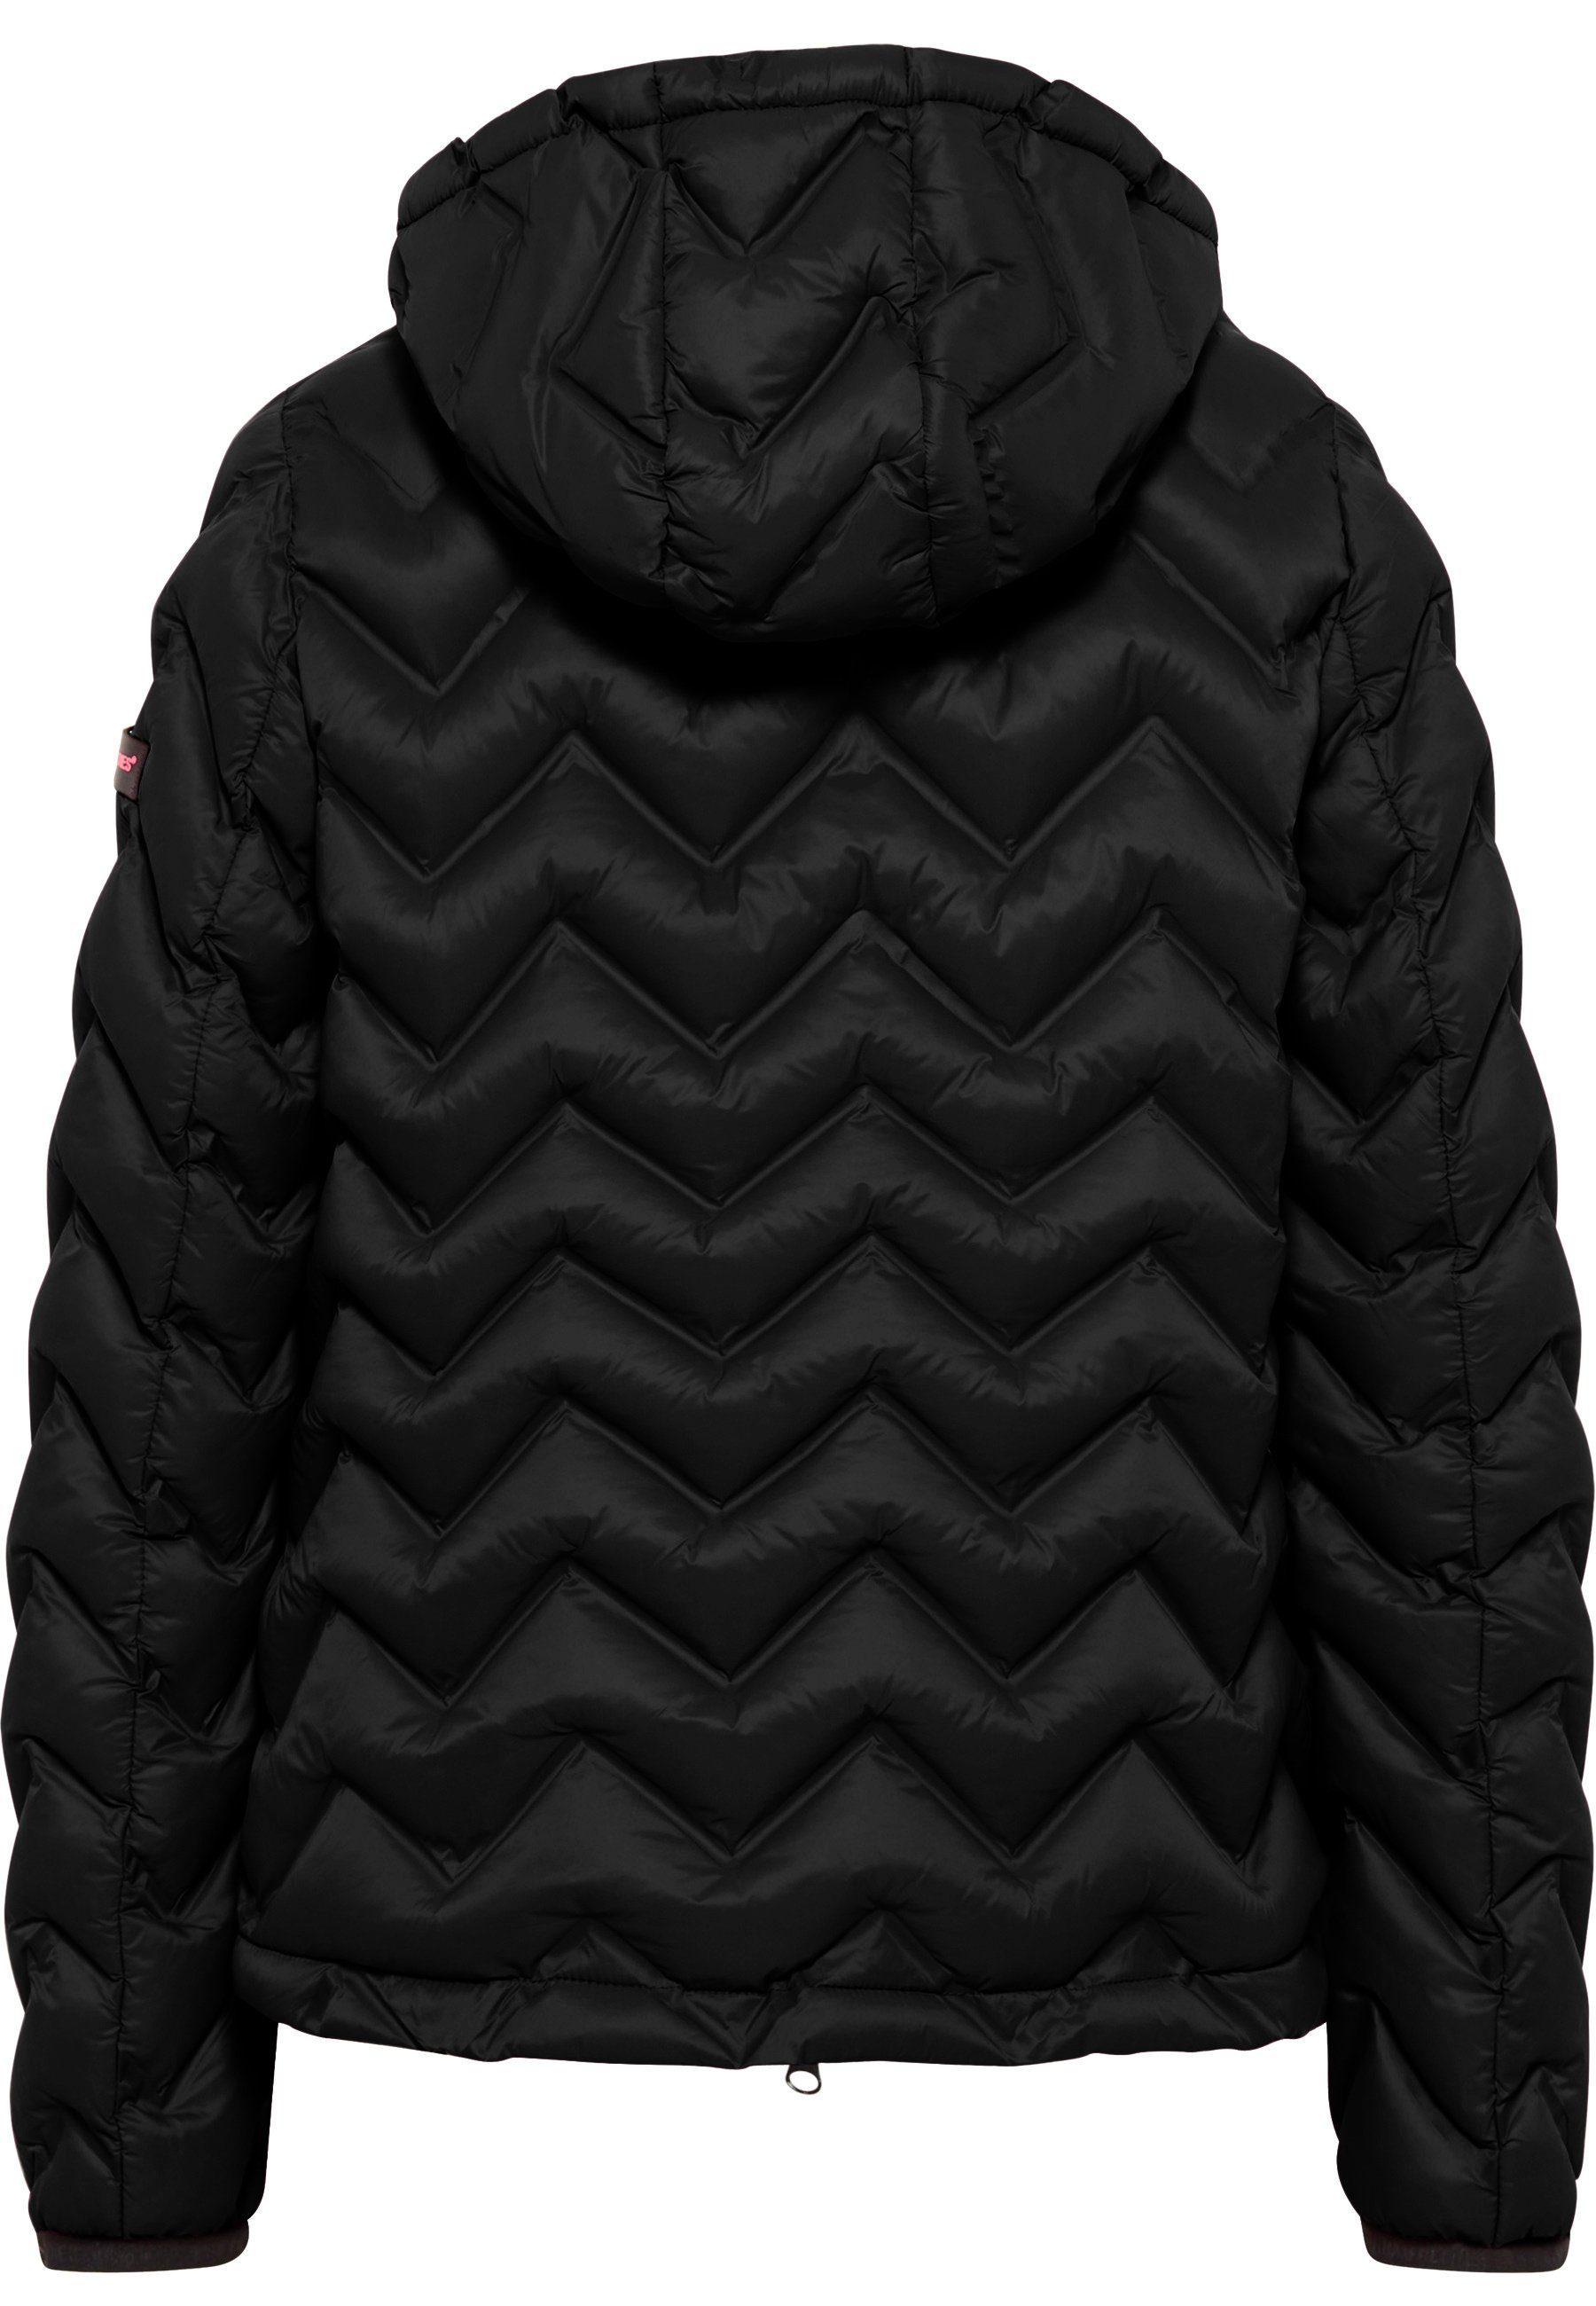 Mailynn Jacket, Freddies Steppjacke & NY mit Thermolite BLACK Reißverschluss Frieda